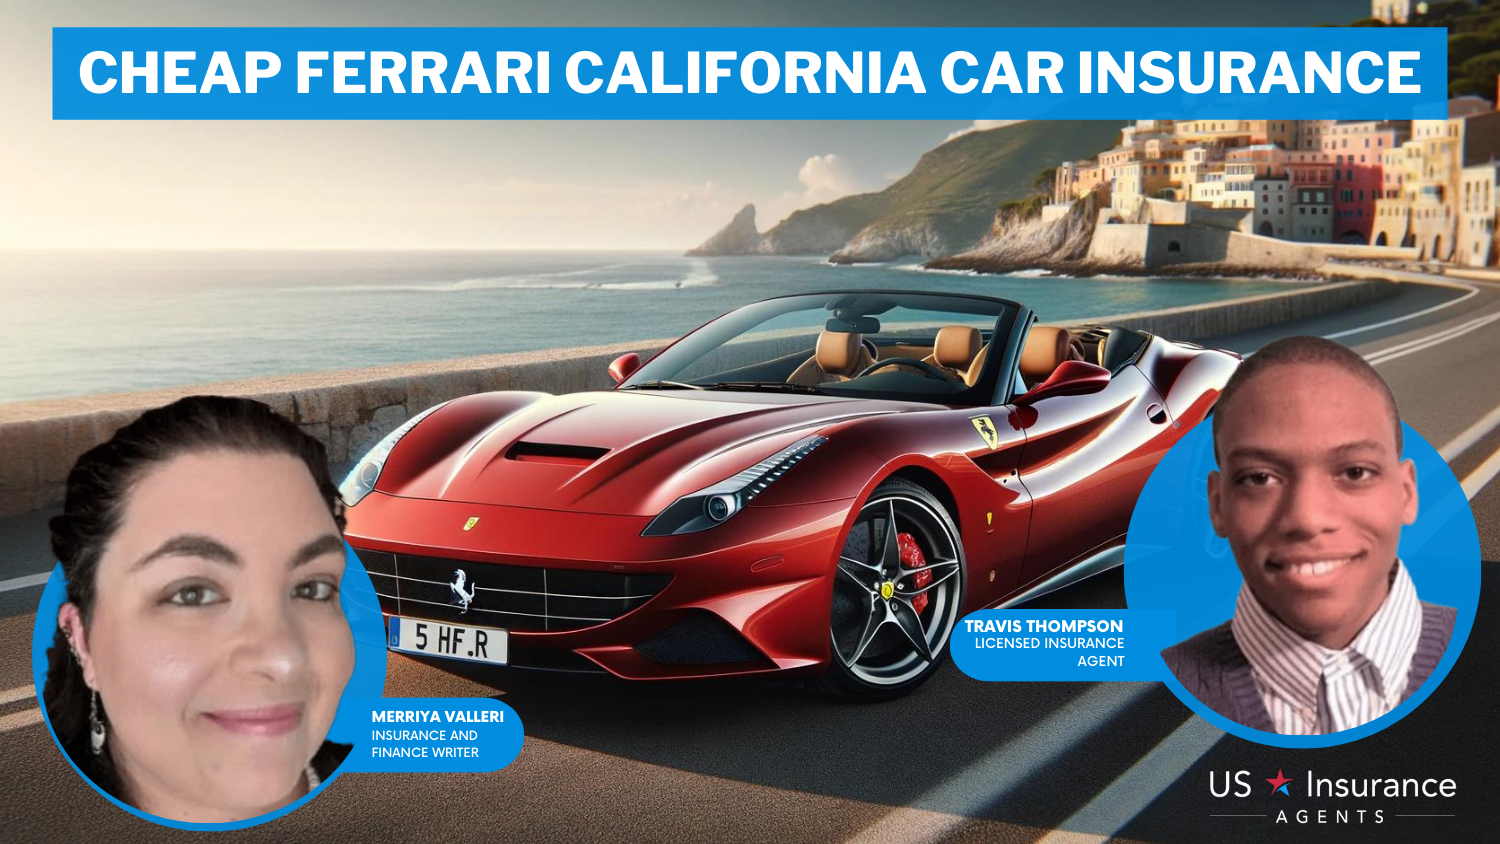 Progressive, State Farm and Nationwide: Cheap Ferrari California Car Insurance